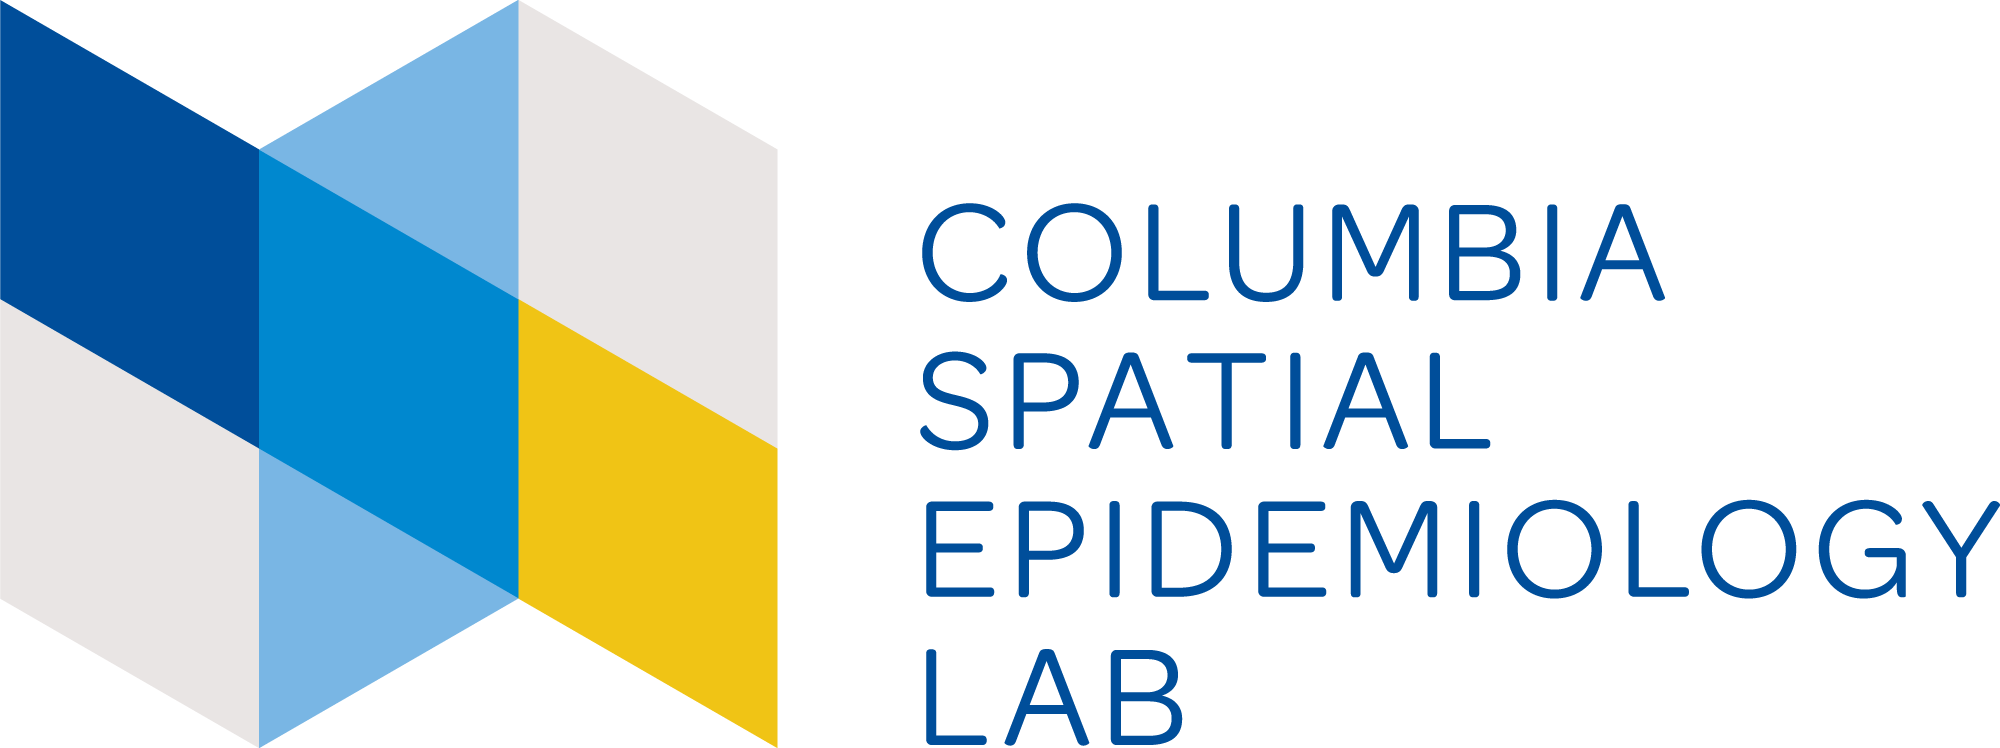 Spatial Epidemiology Lab